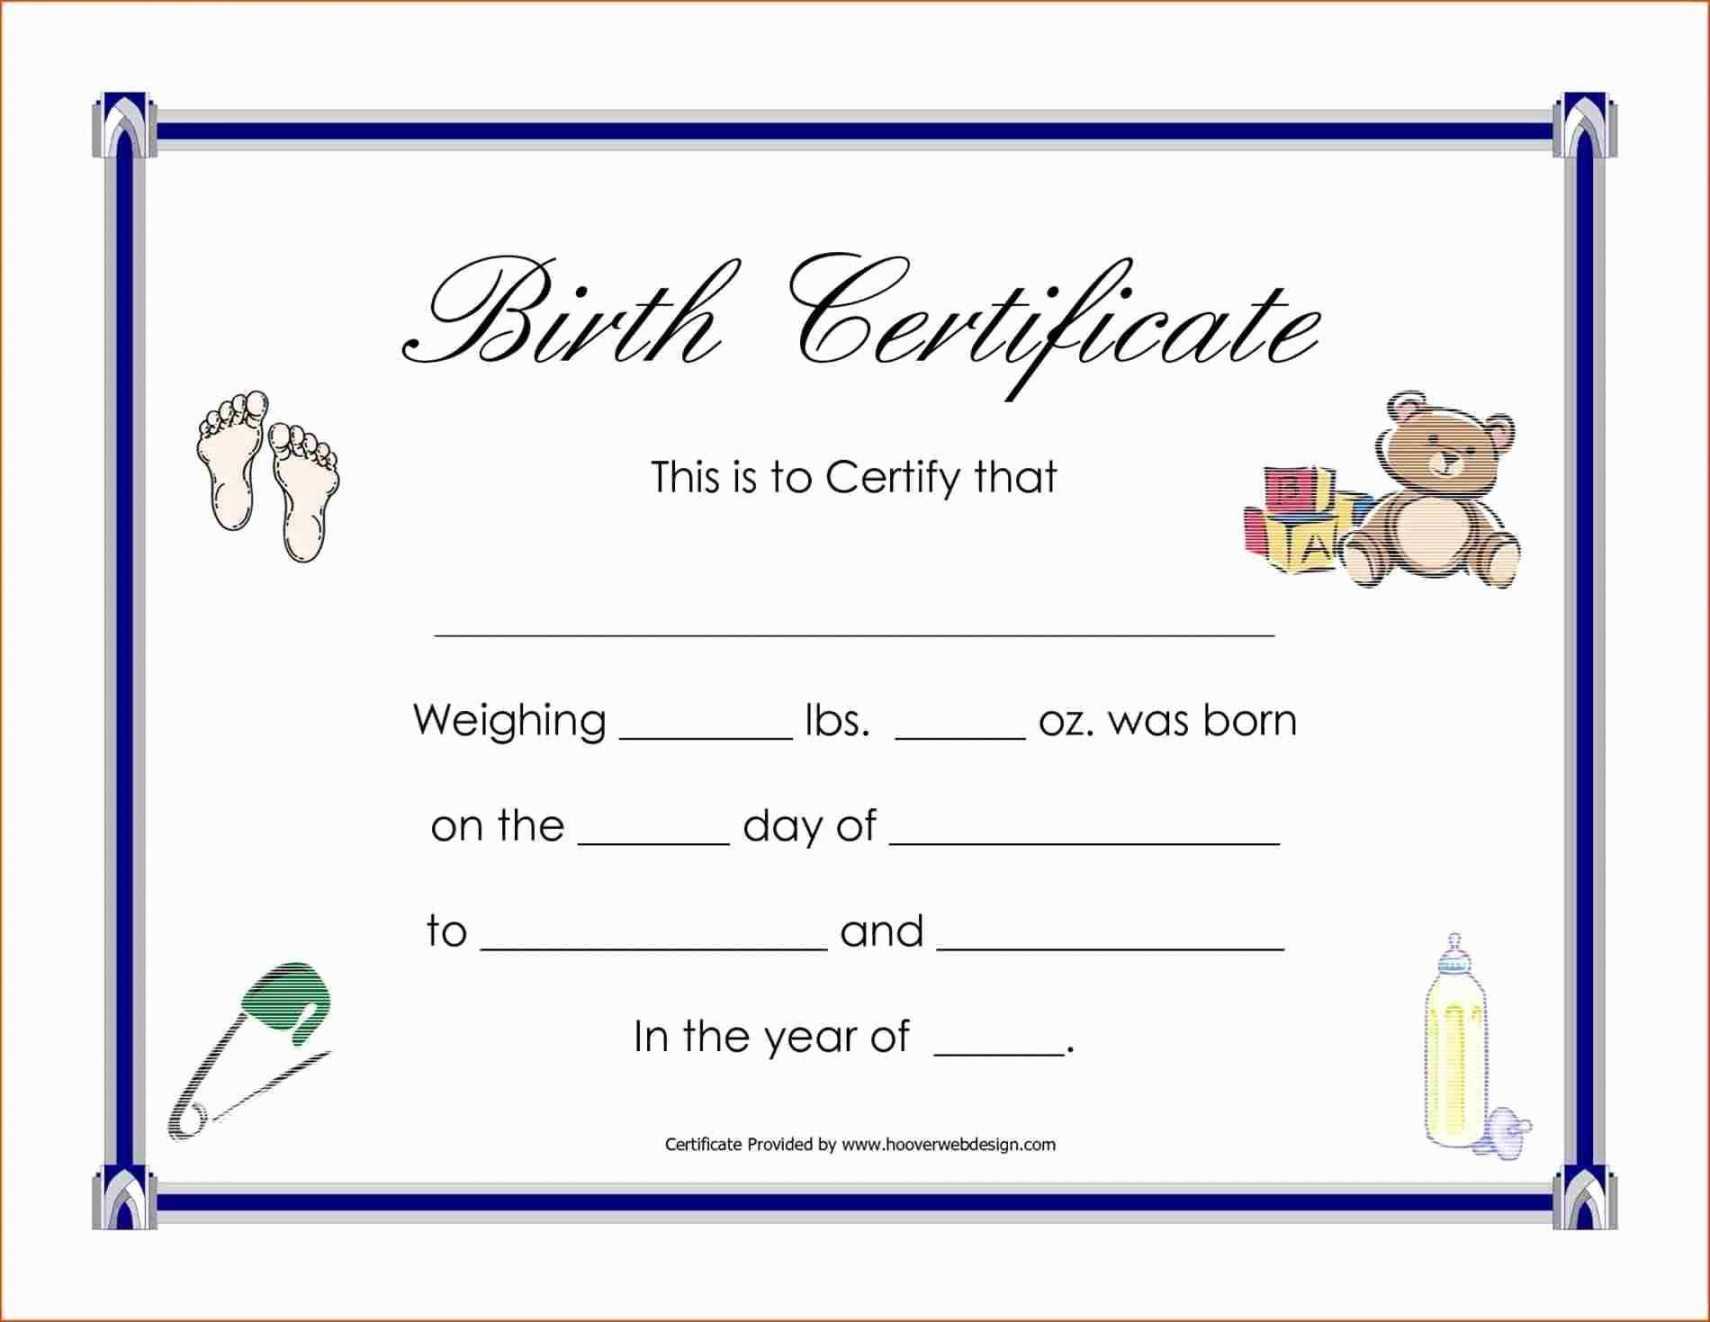 Child Adoption Certificate Template - Karan.ald2014 For Child Adoption Certificate Template